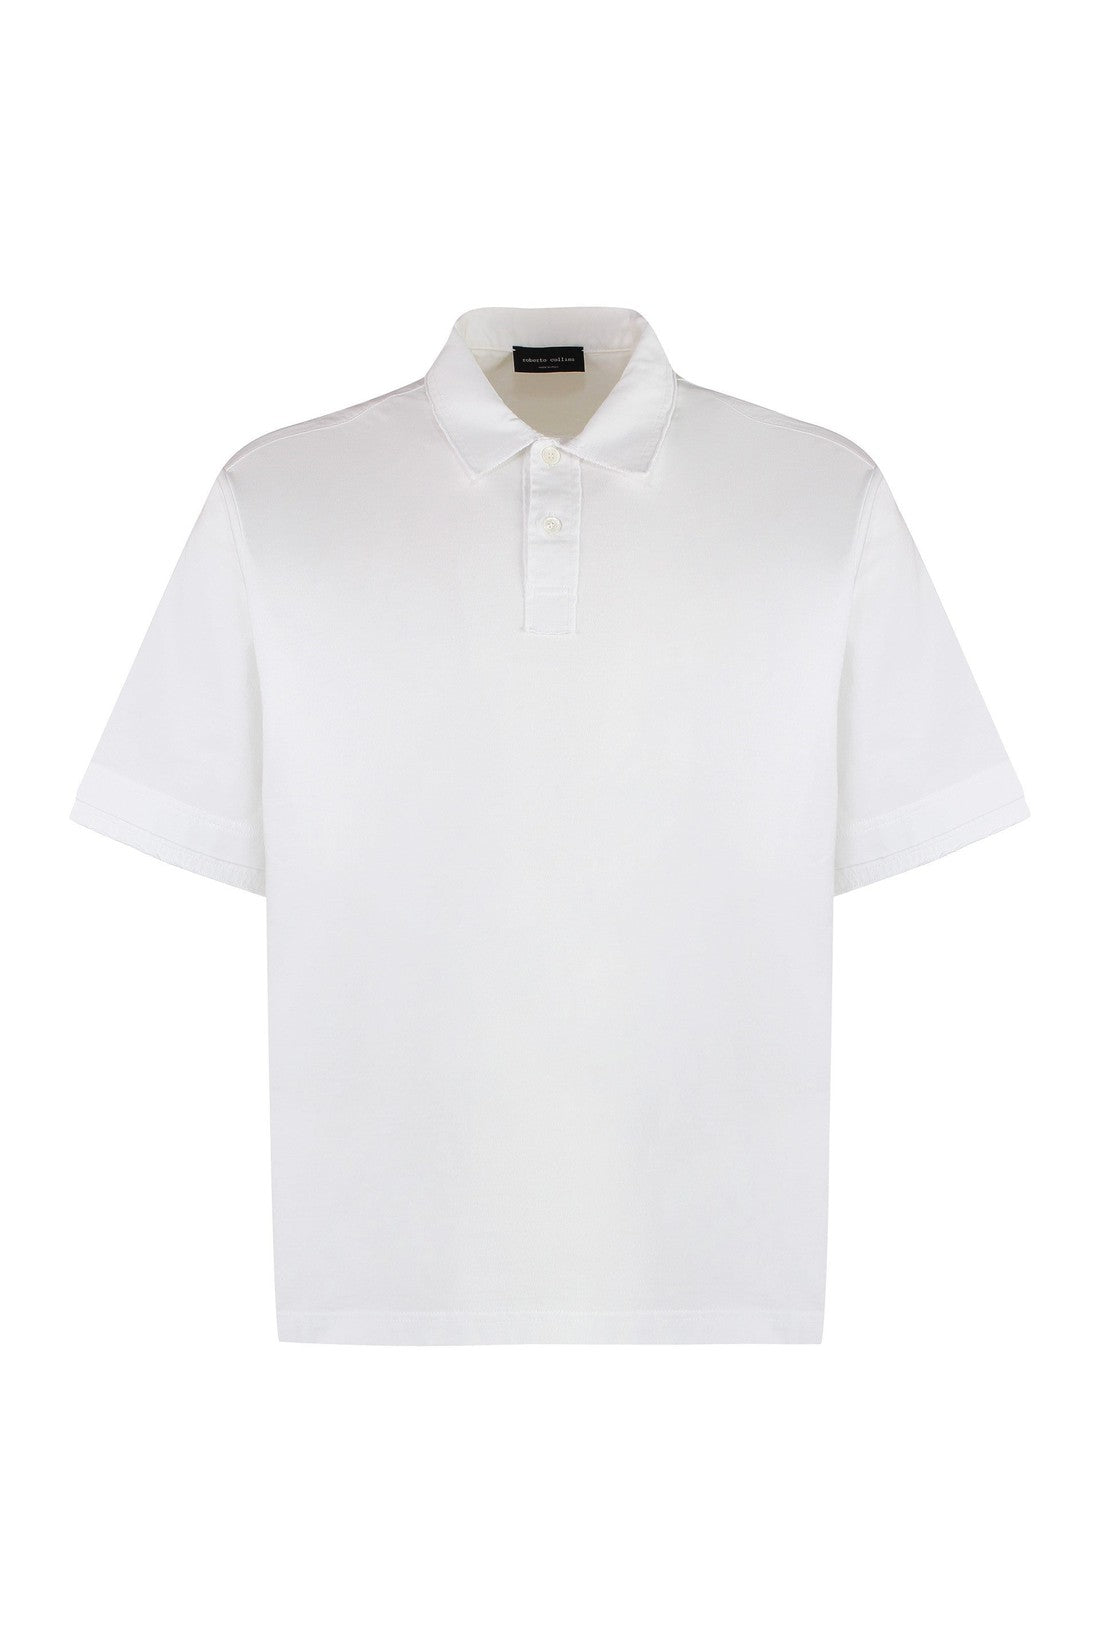 Roberto Collina-OUTLET-SALE-Short sleeve cotton polo shirt-ARCHIVIST